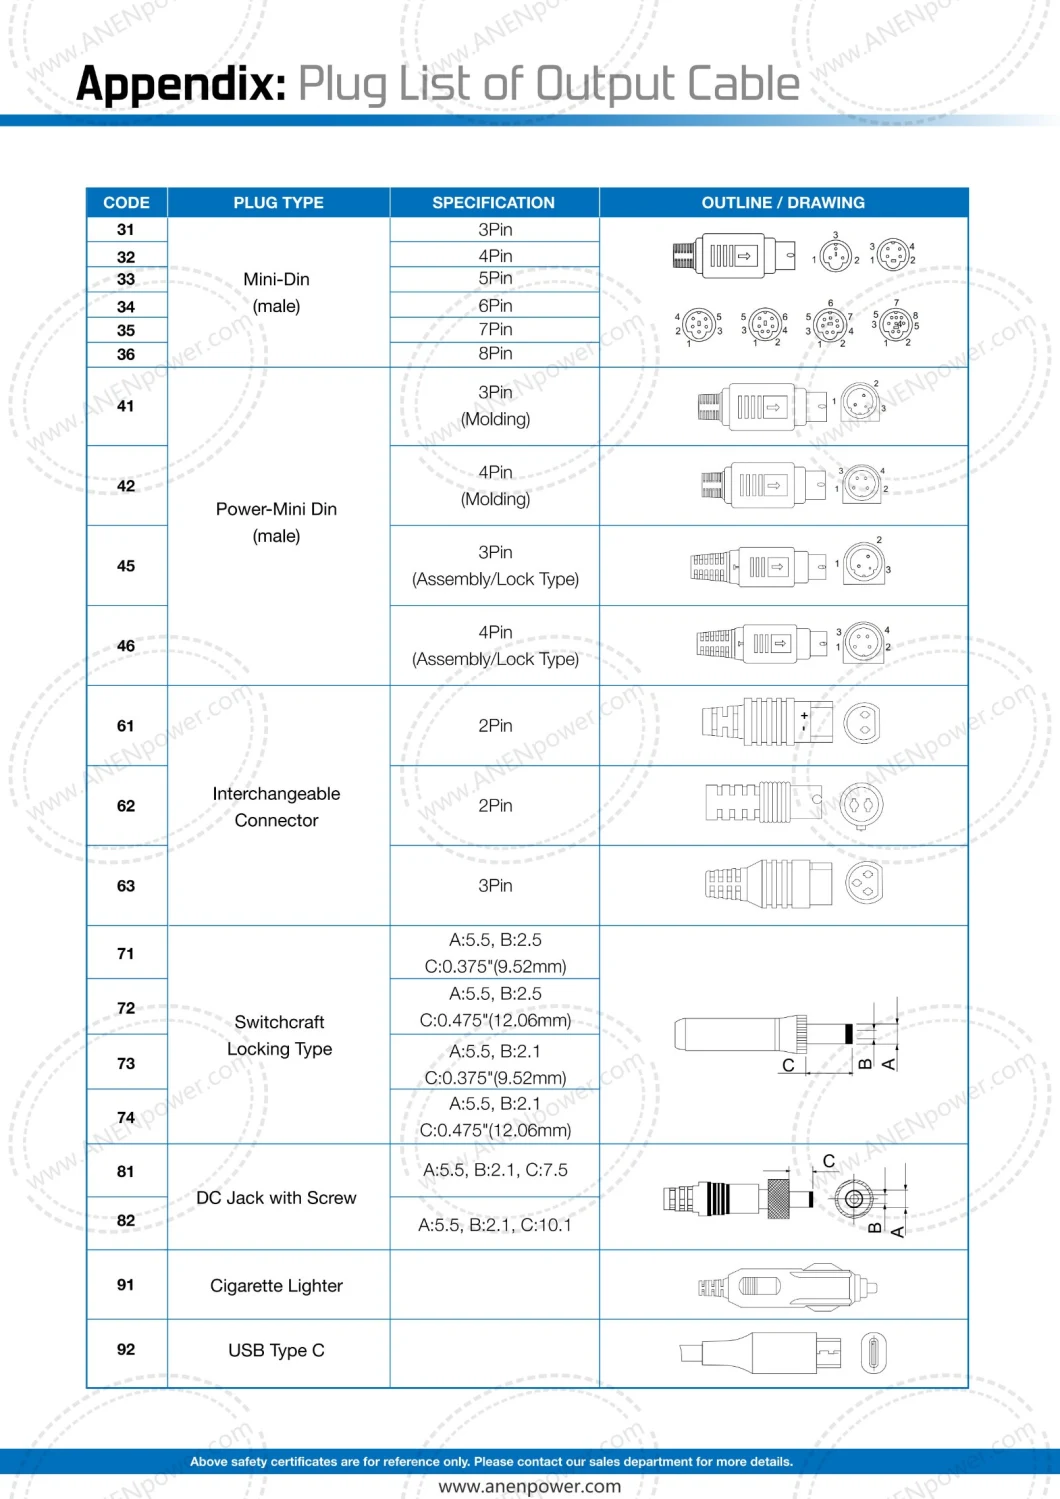 Aus Plug 36W Max 5 Volt 9 Volt AC DC Wall Transformer 12 Volt 24 Volt Medical USB Charger Power Supply Adapter with En/IEC 60601 Certificate